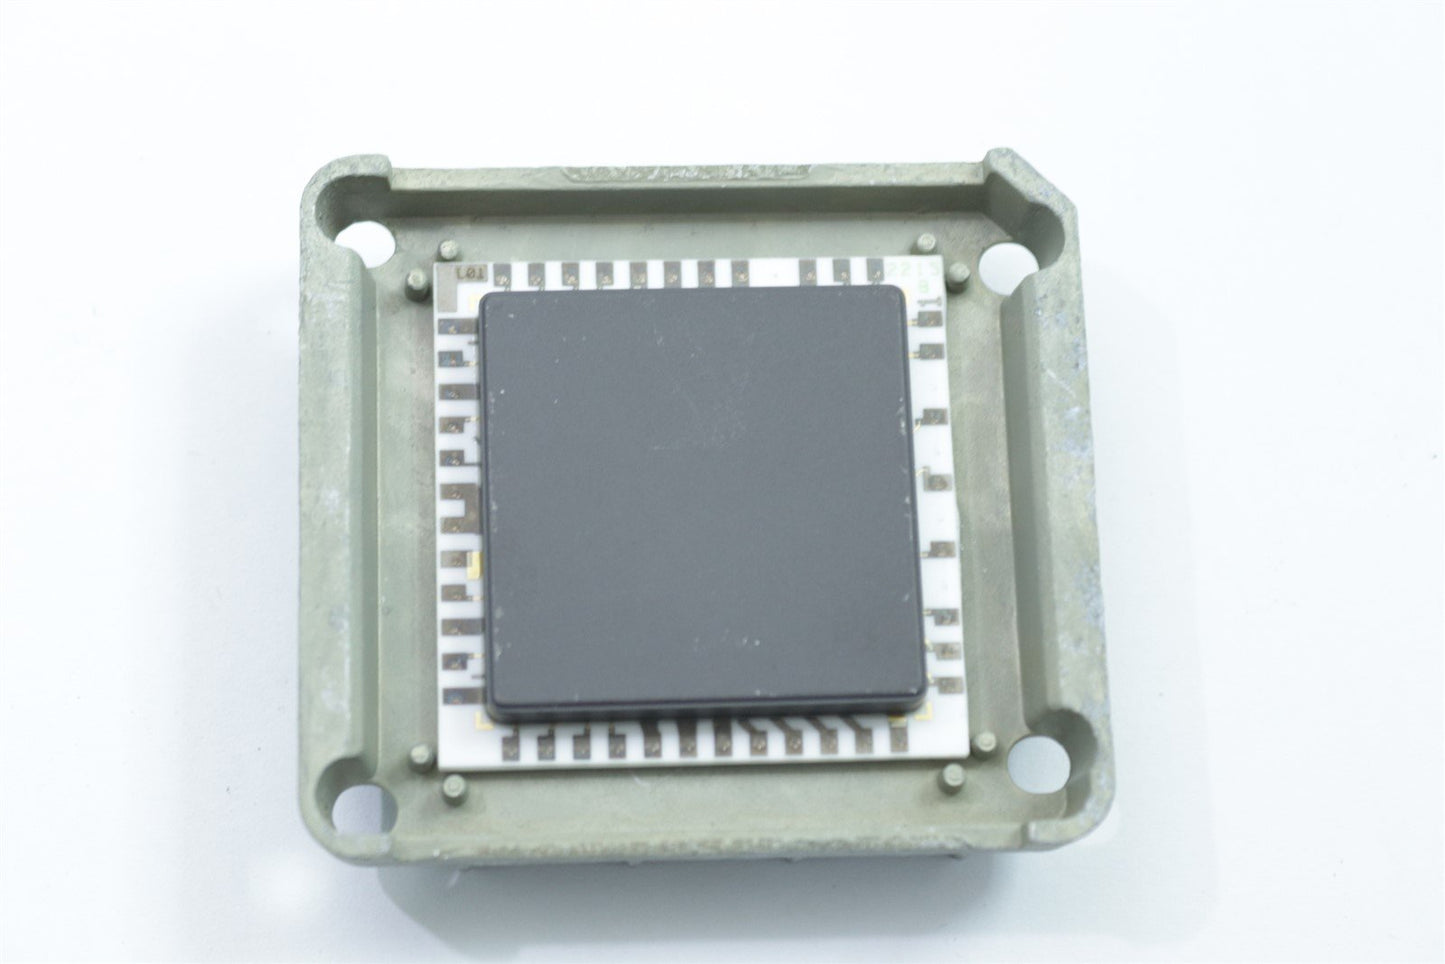 Tektronix Chip 165-2215-01 2430A Oscilloscope